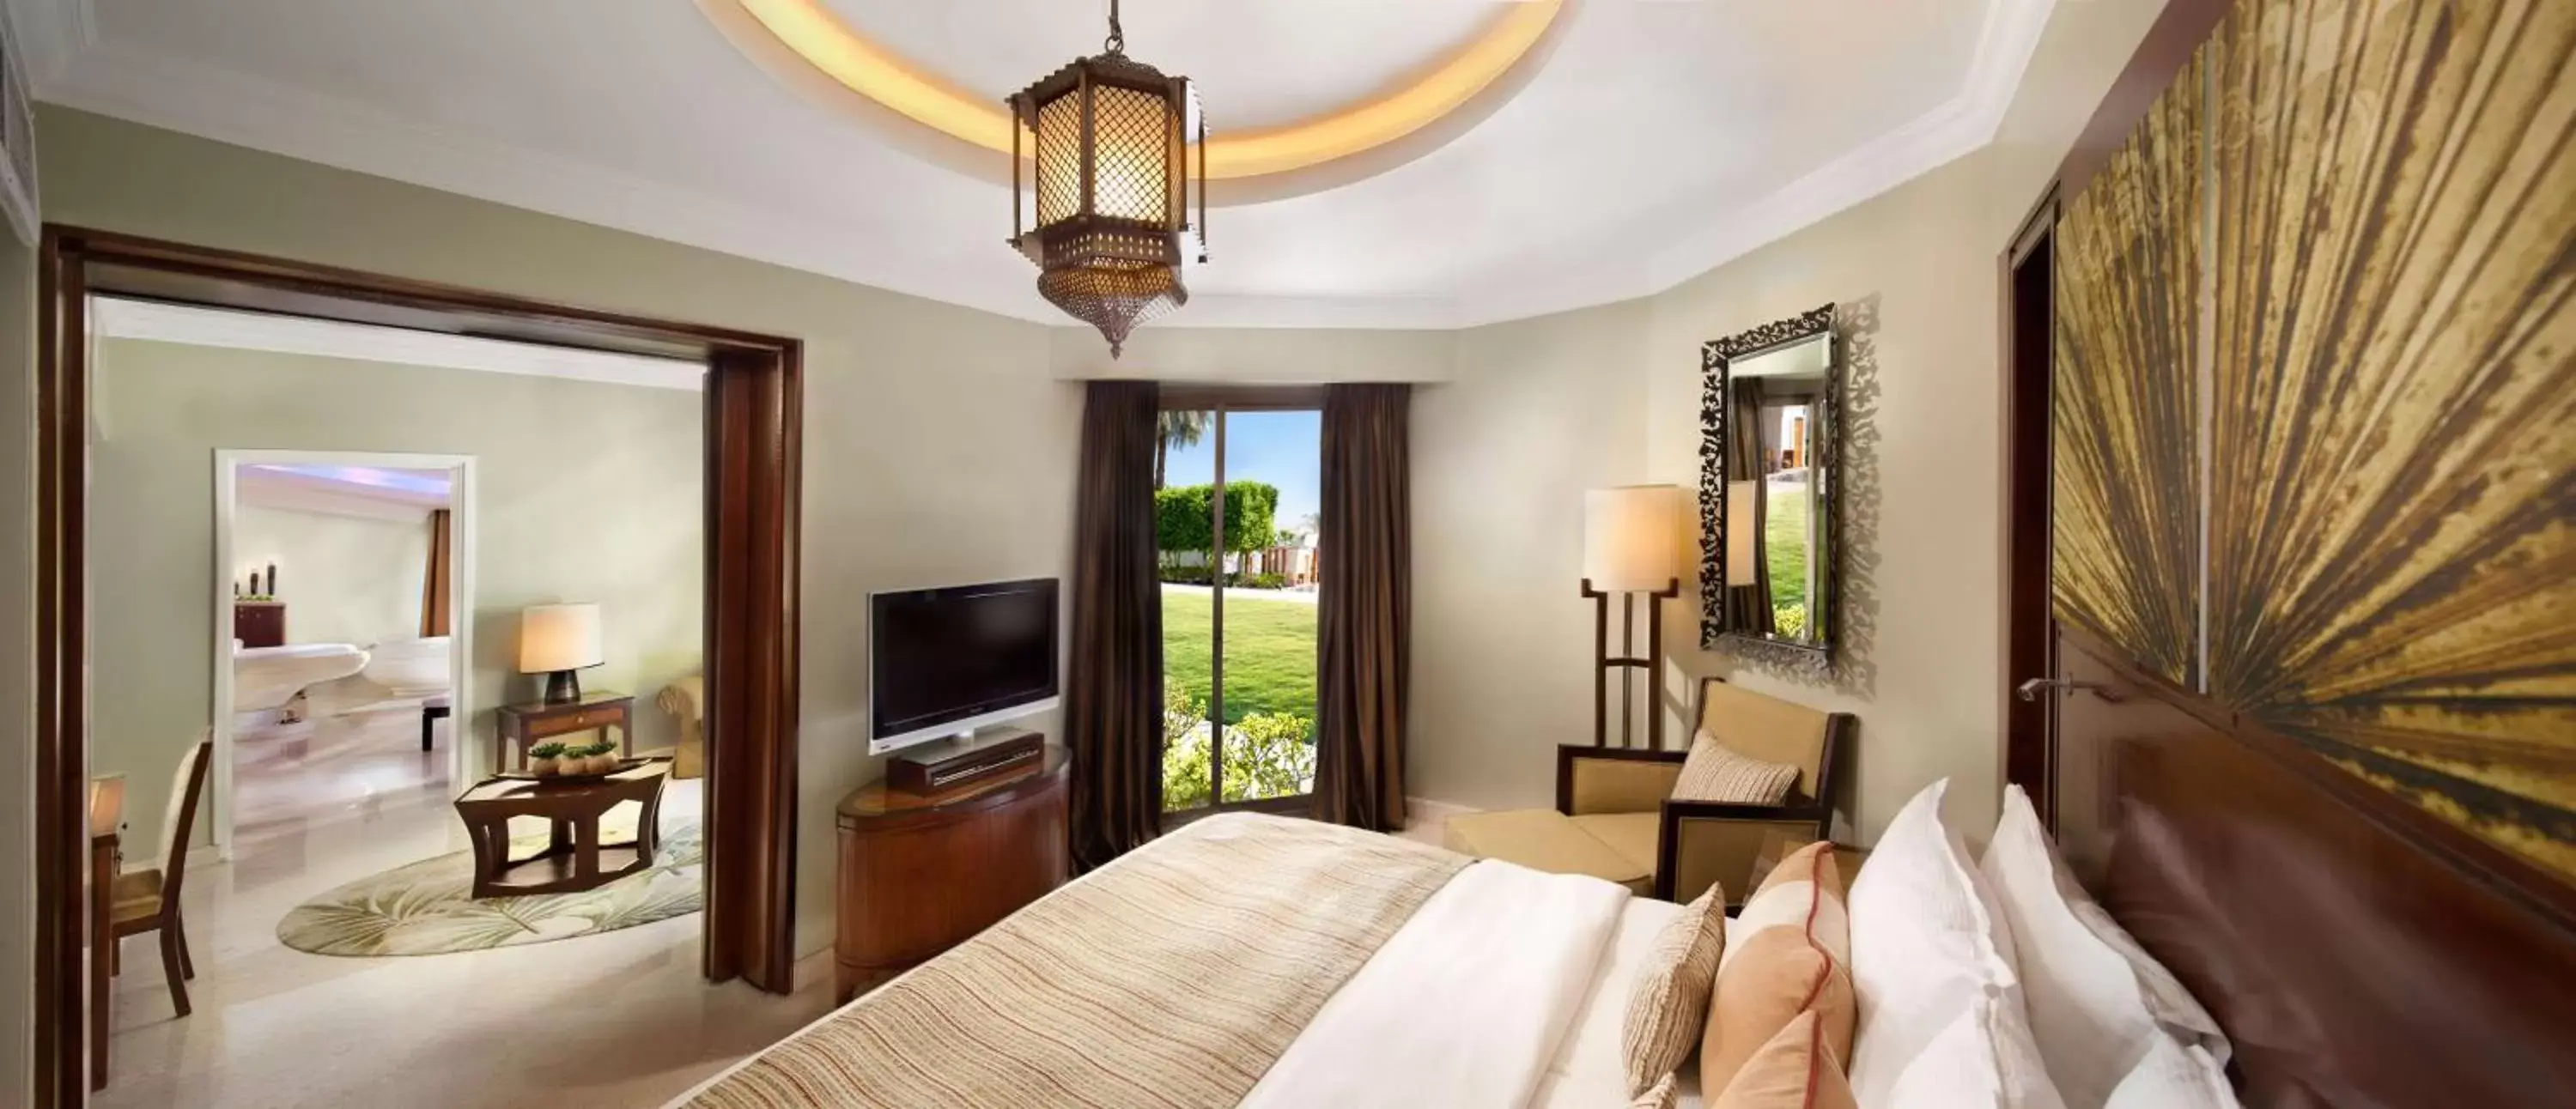 Bedroom in Hilton Luxor Resort & Spa